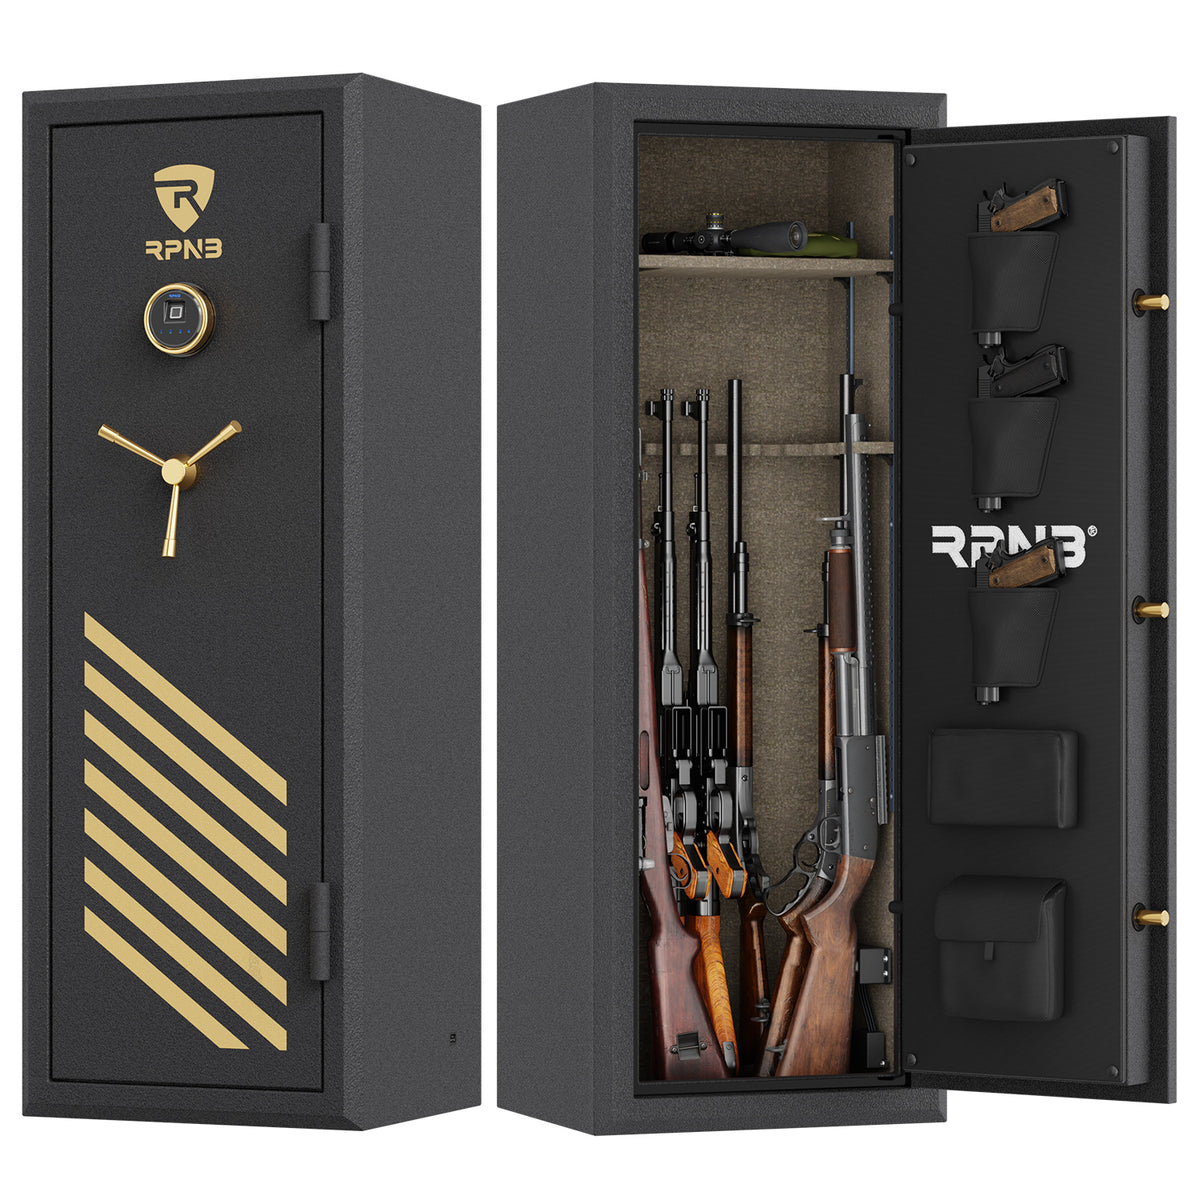 RPNB RPFS14-B 14 Gun Fireproof Biometric Gun Safe Black Door Open &amp; Closed With Rifles